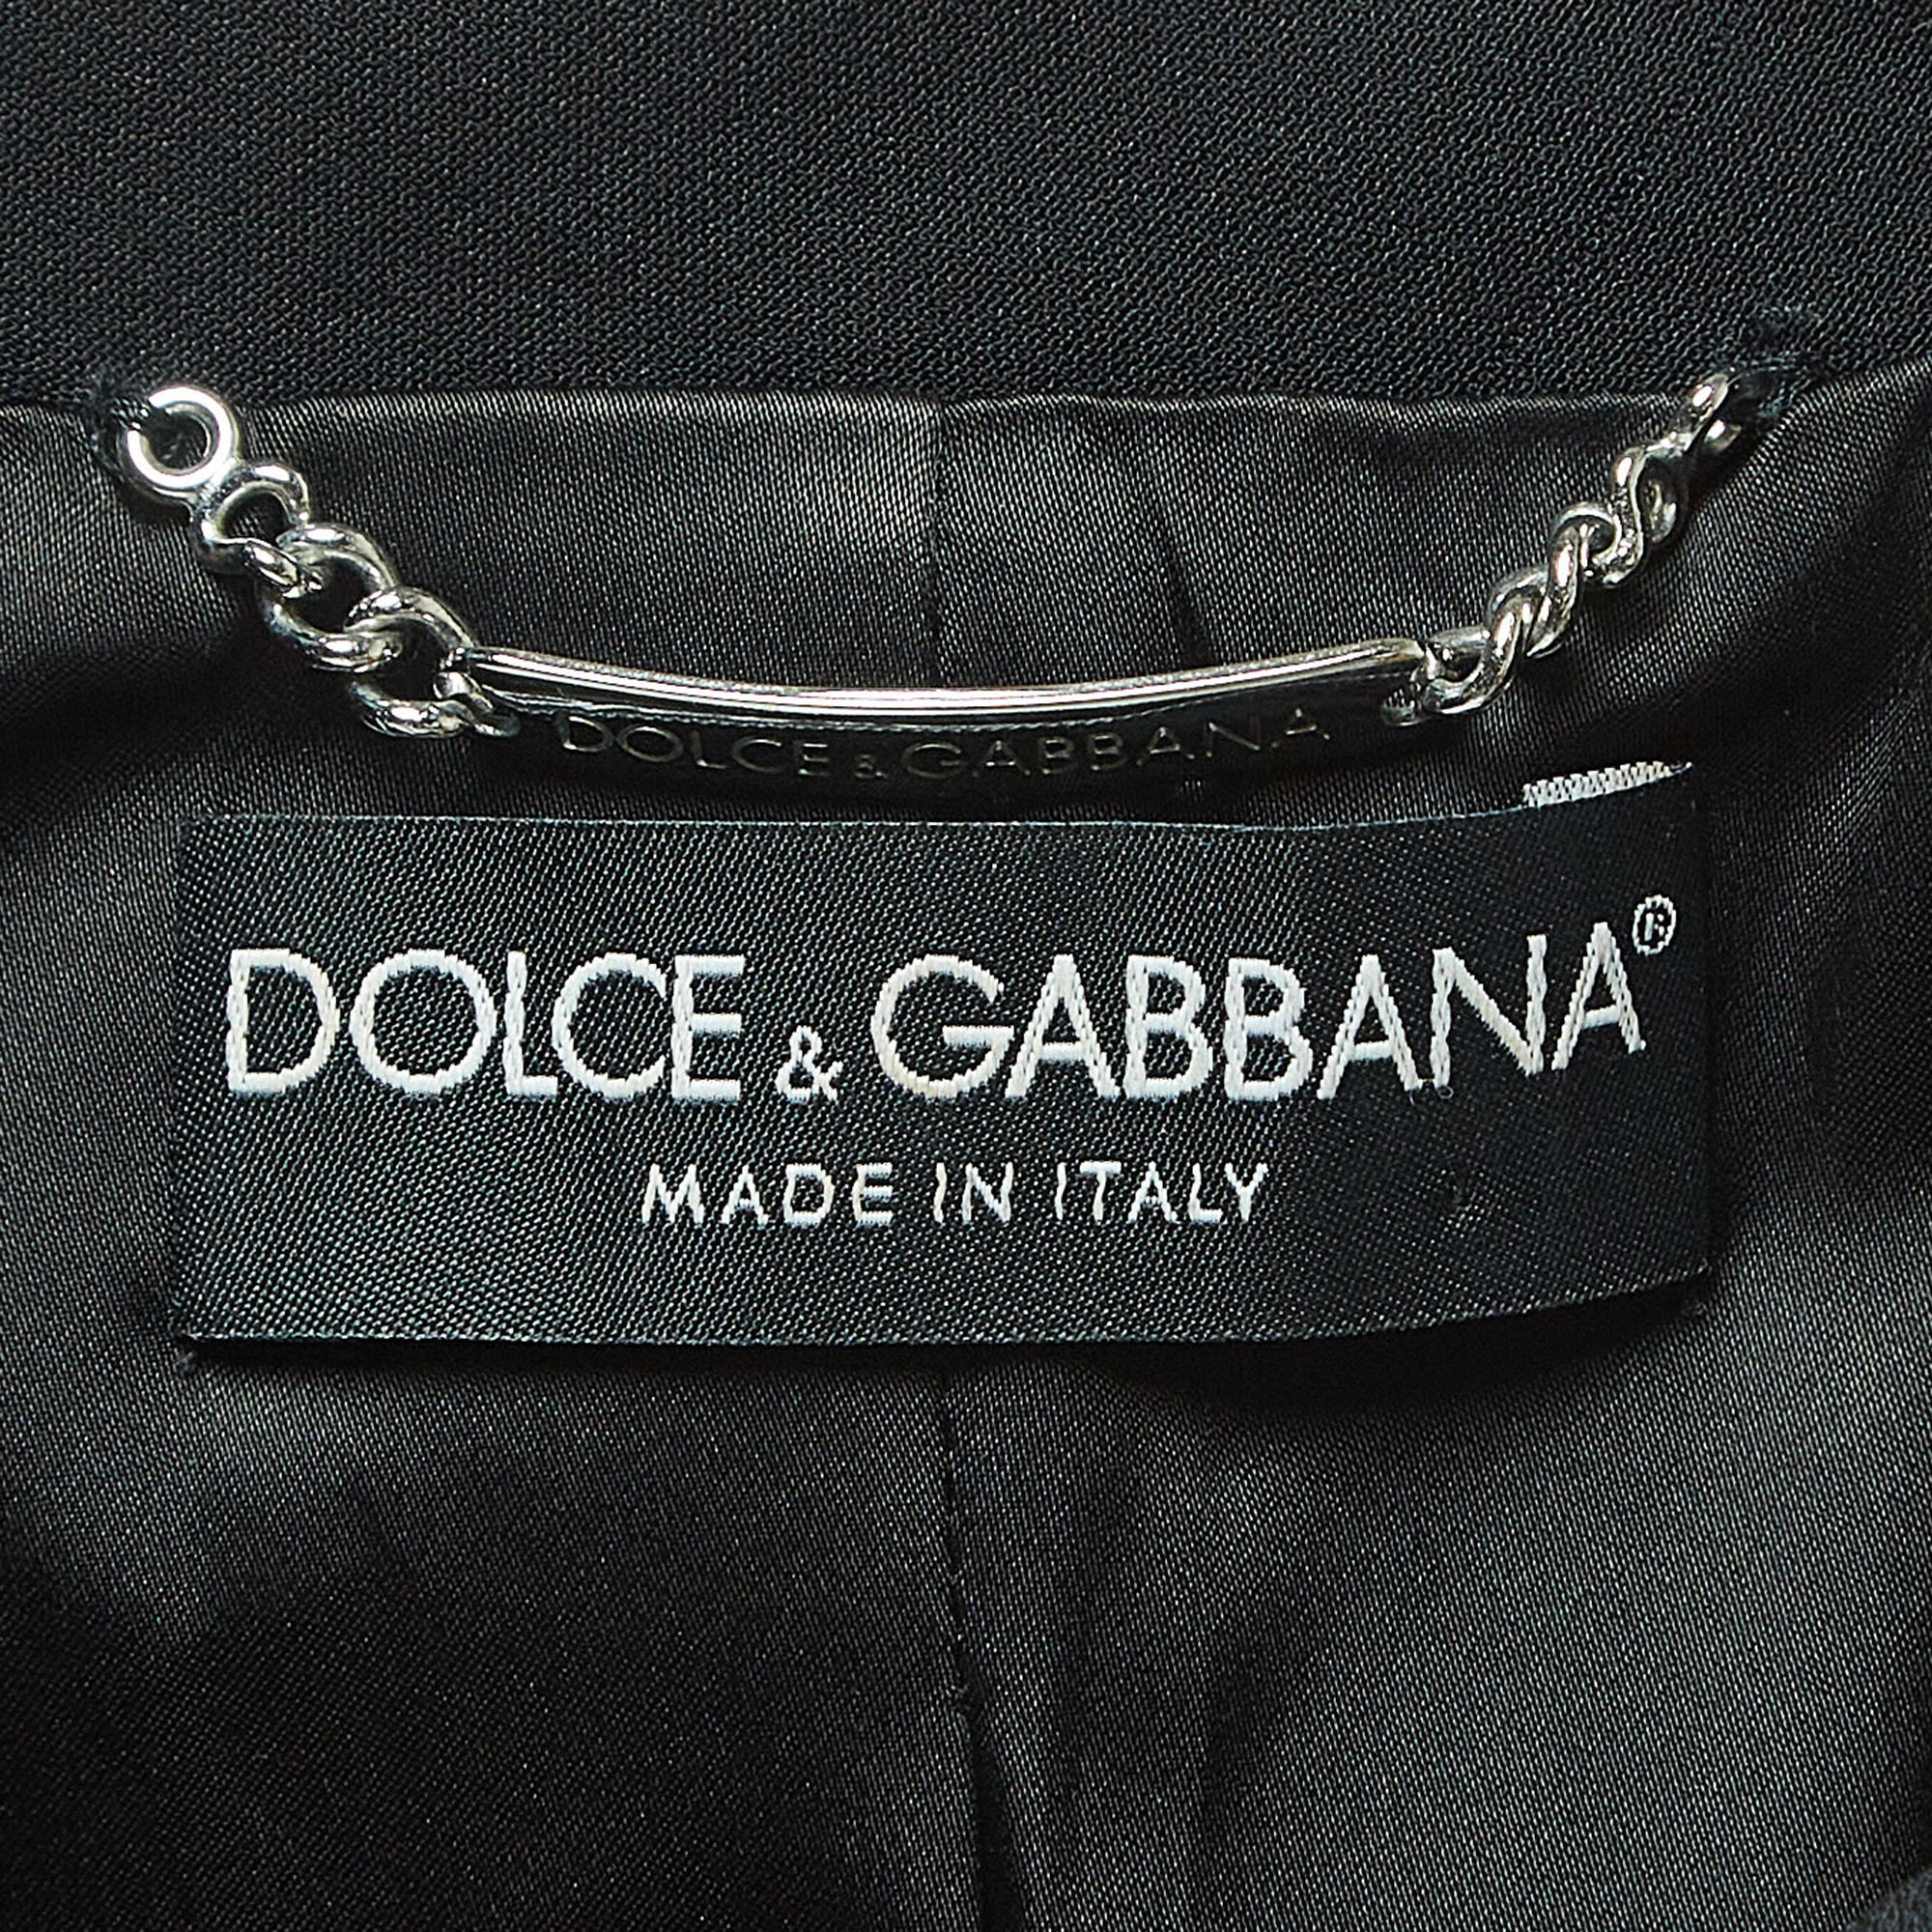 Dolce & Gabbana Black Crepe Buttoned Jacket S